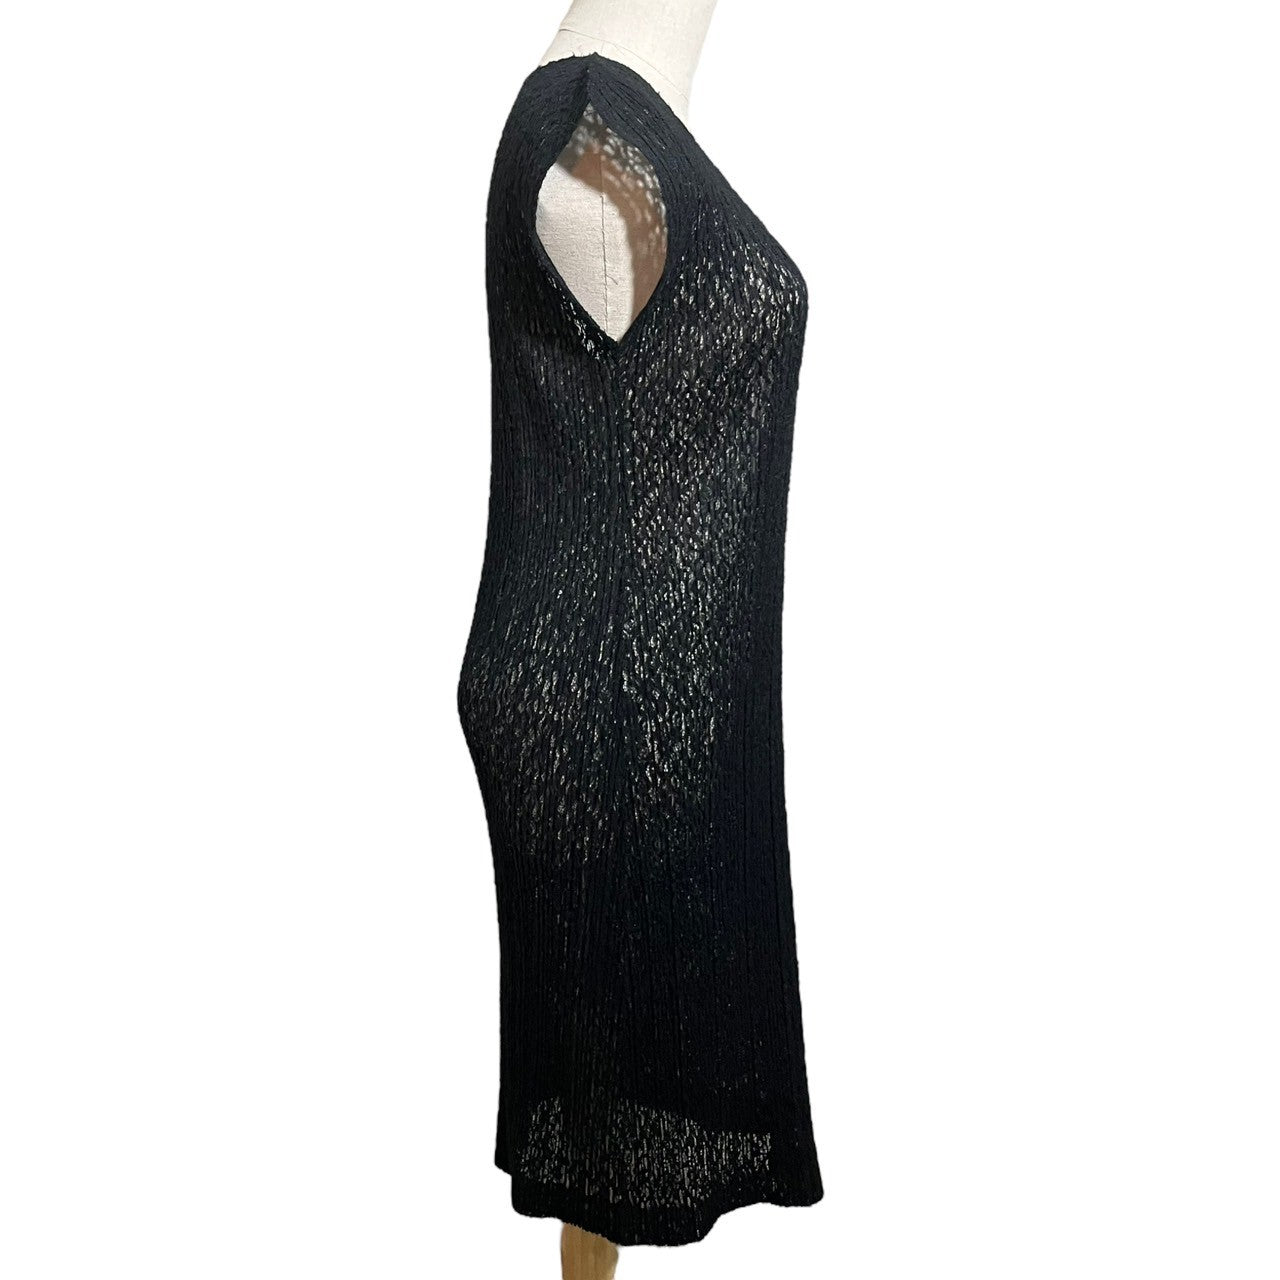 PLEATS PLEASE(プリーツプリーズ) 15AW  Lace pleated dress 総レース プリーツ ワンピース PP53-JK754 3(L程度) ブラック V オープン ネック メッシュ ノースリーブ ドレス